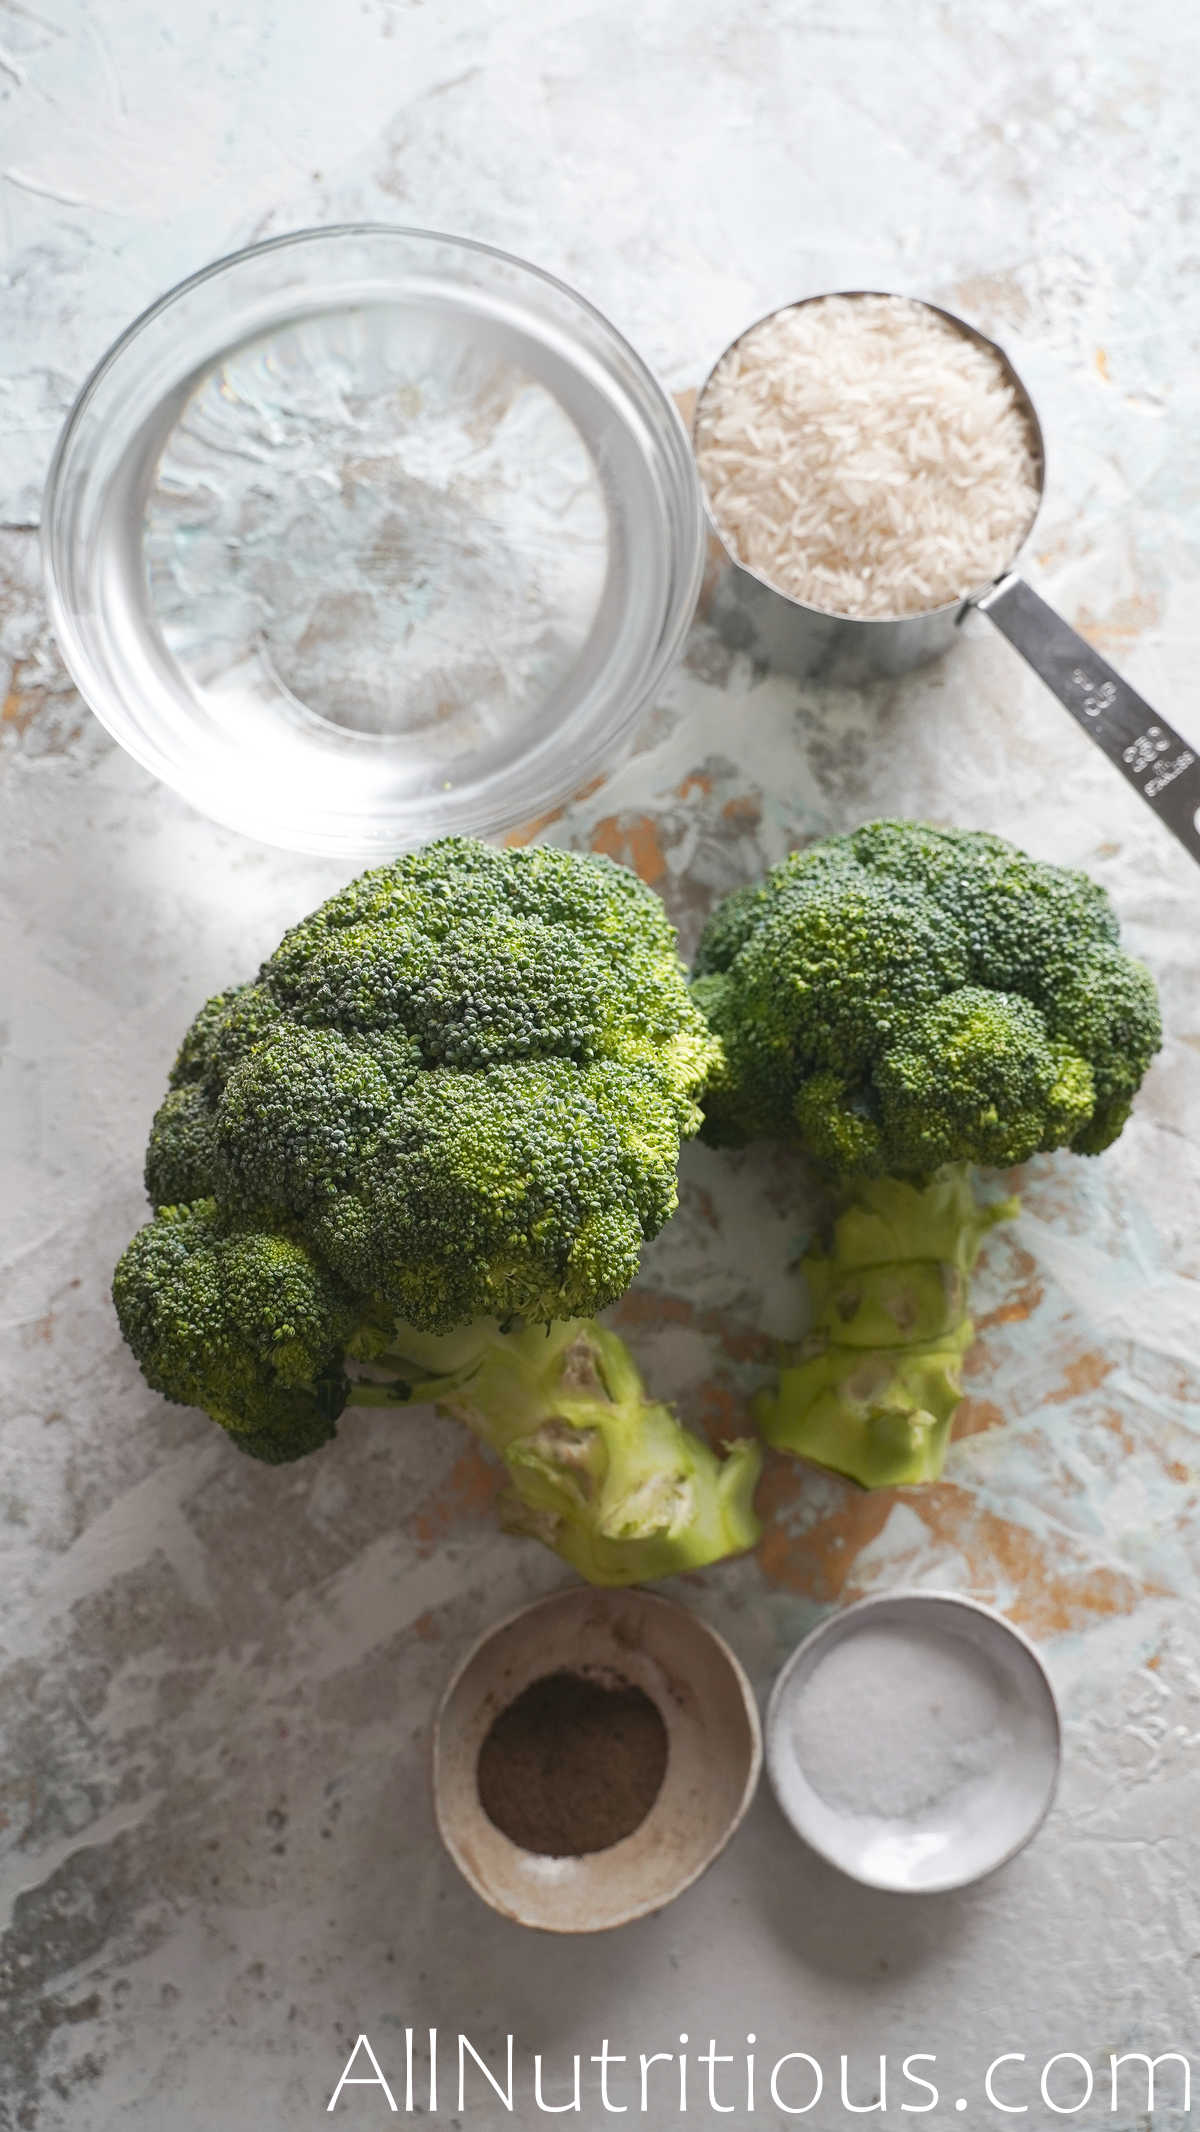 broccoli and rice